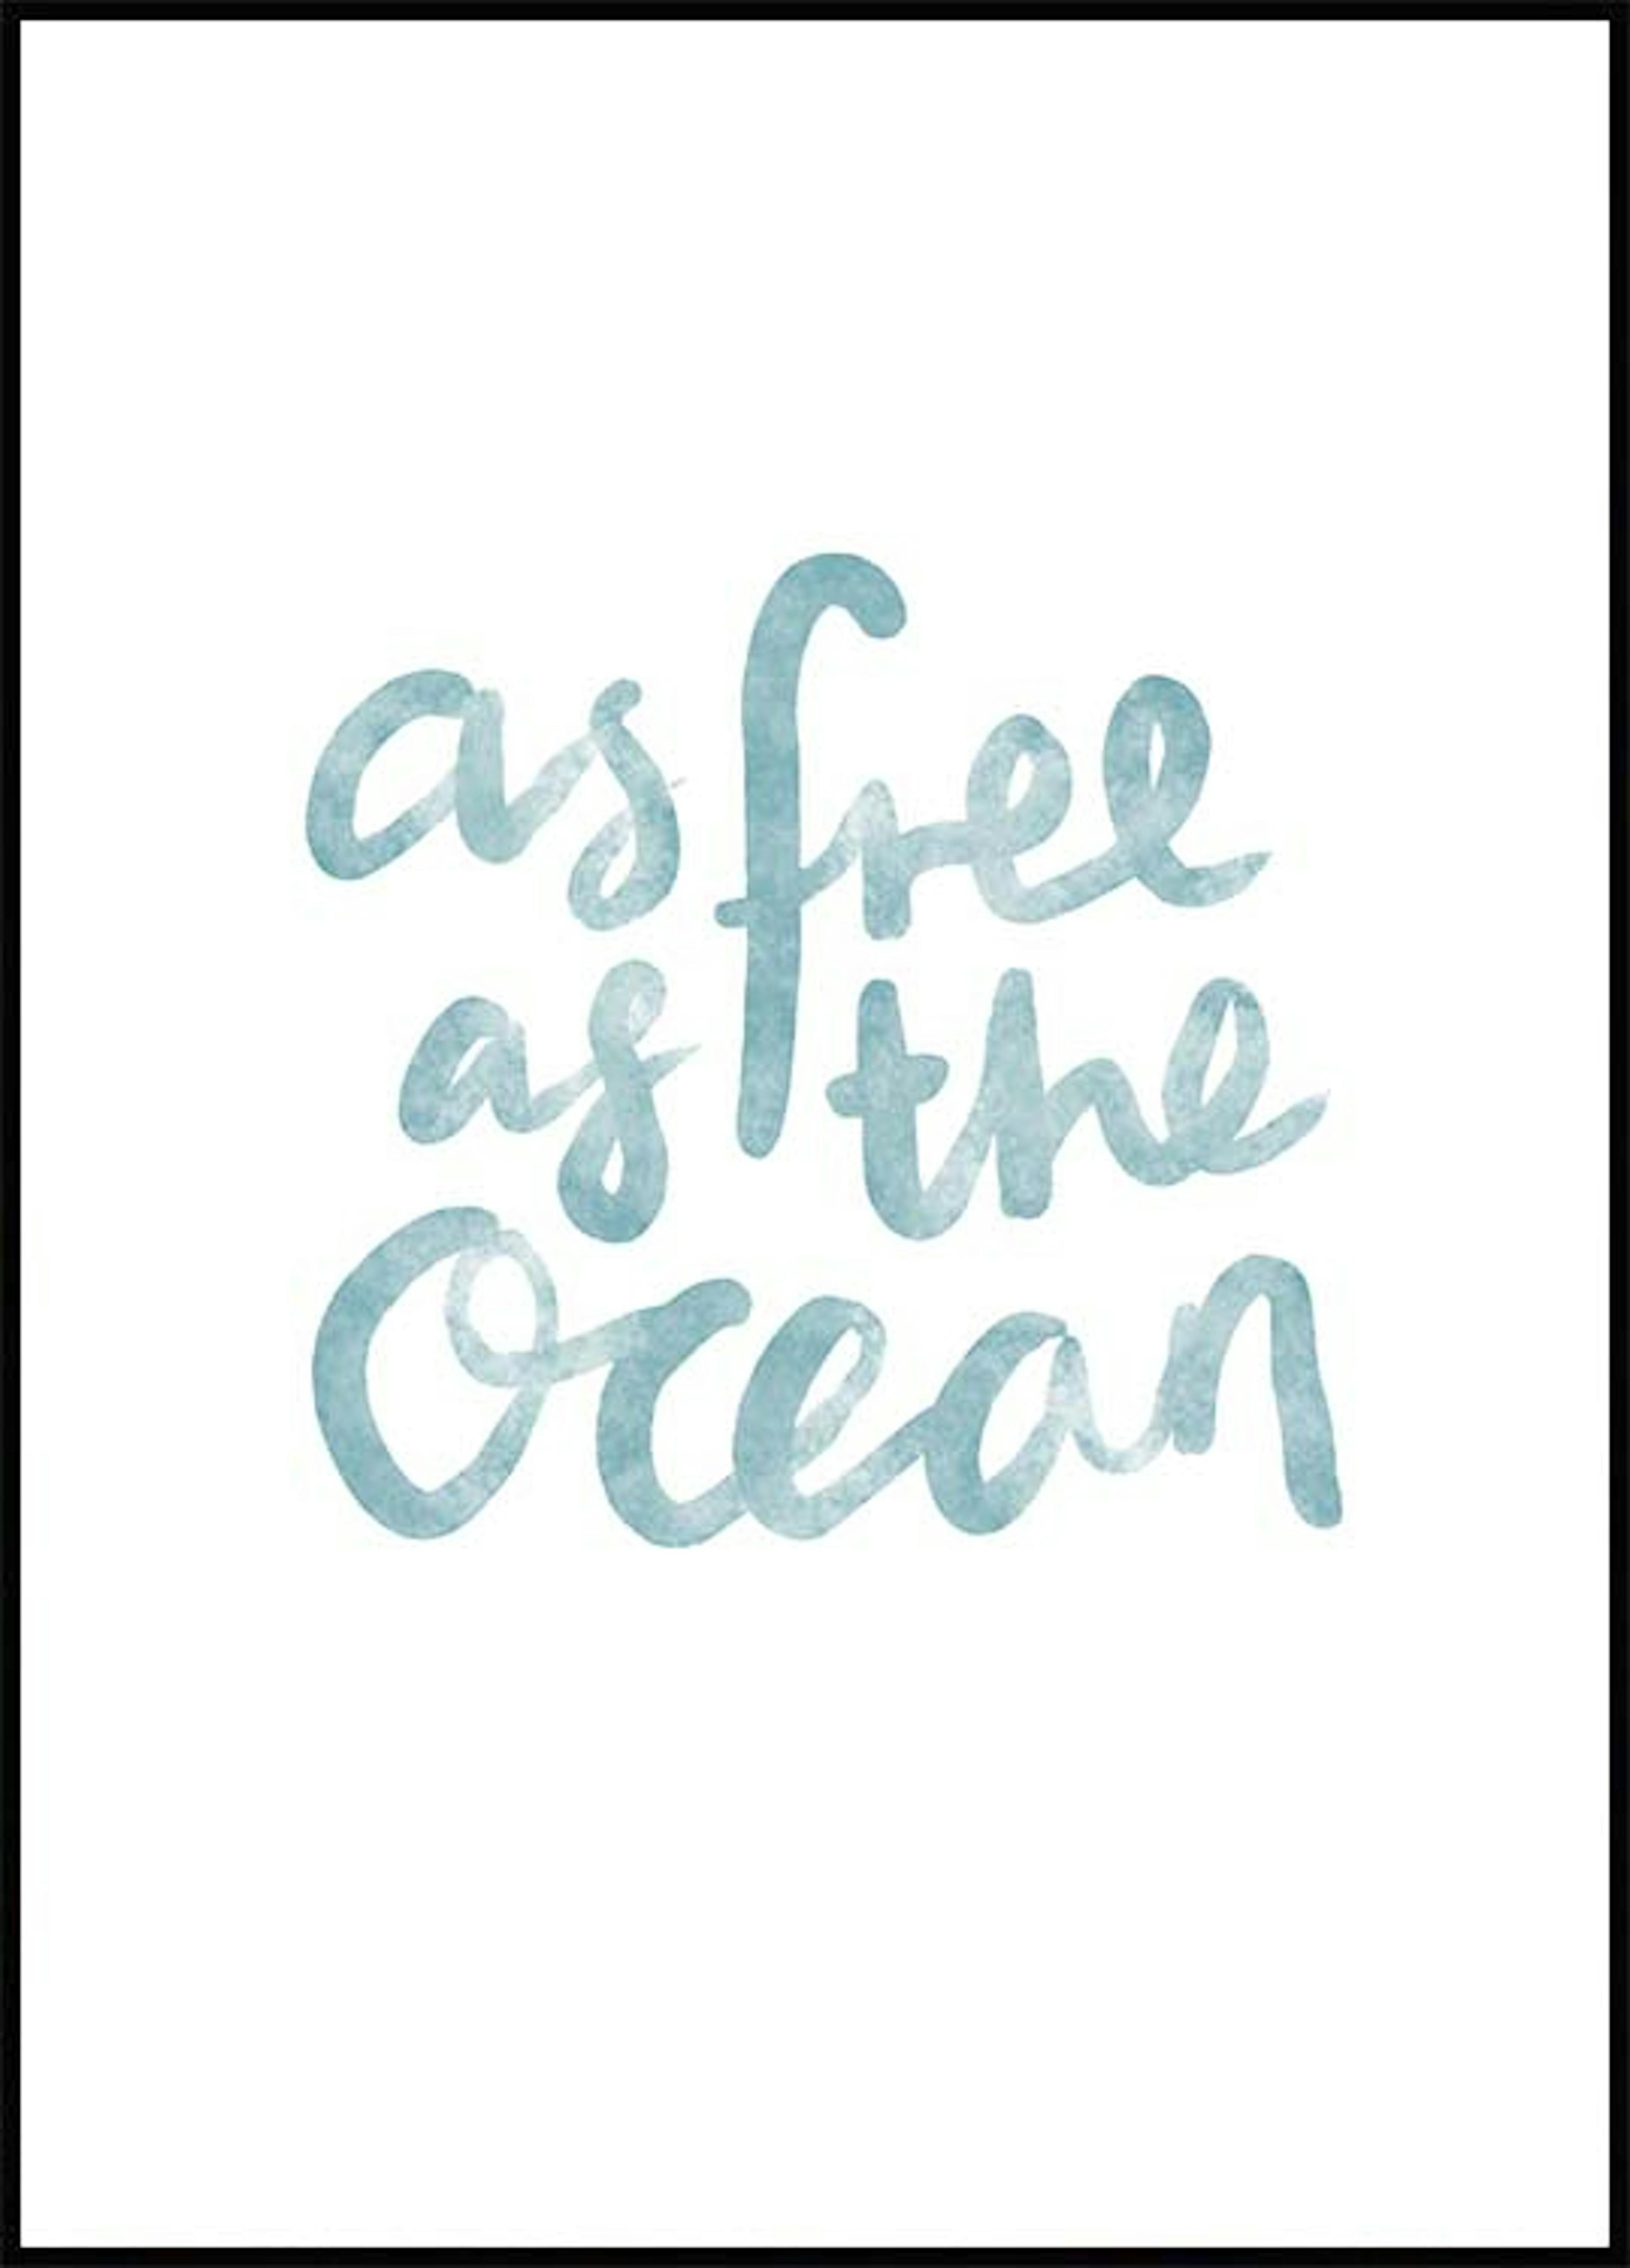 So frei wie das Ozean-Poster 0